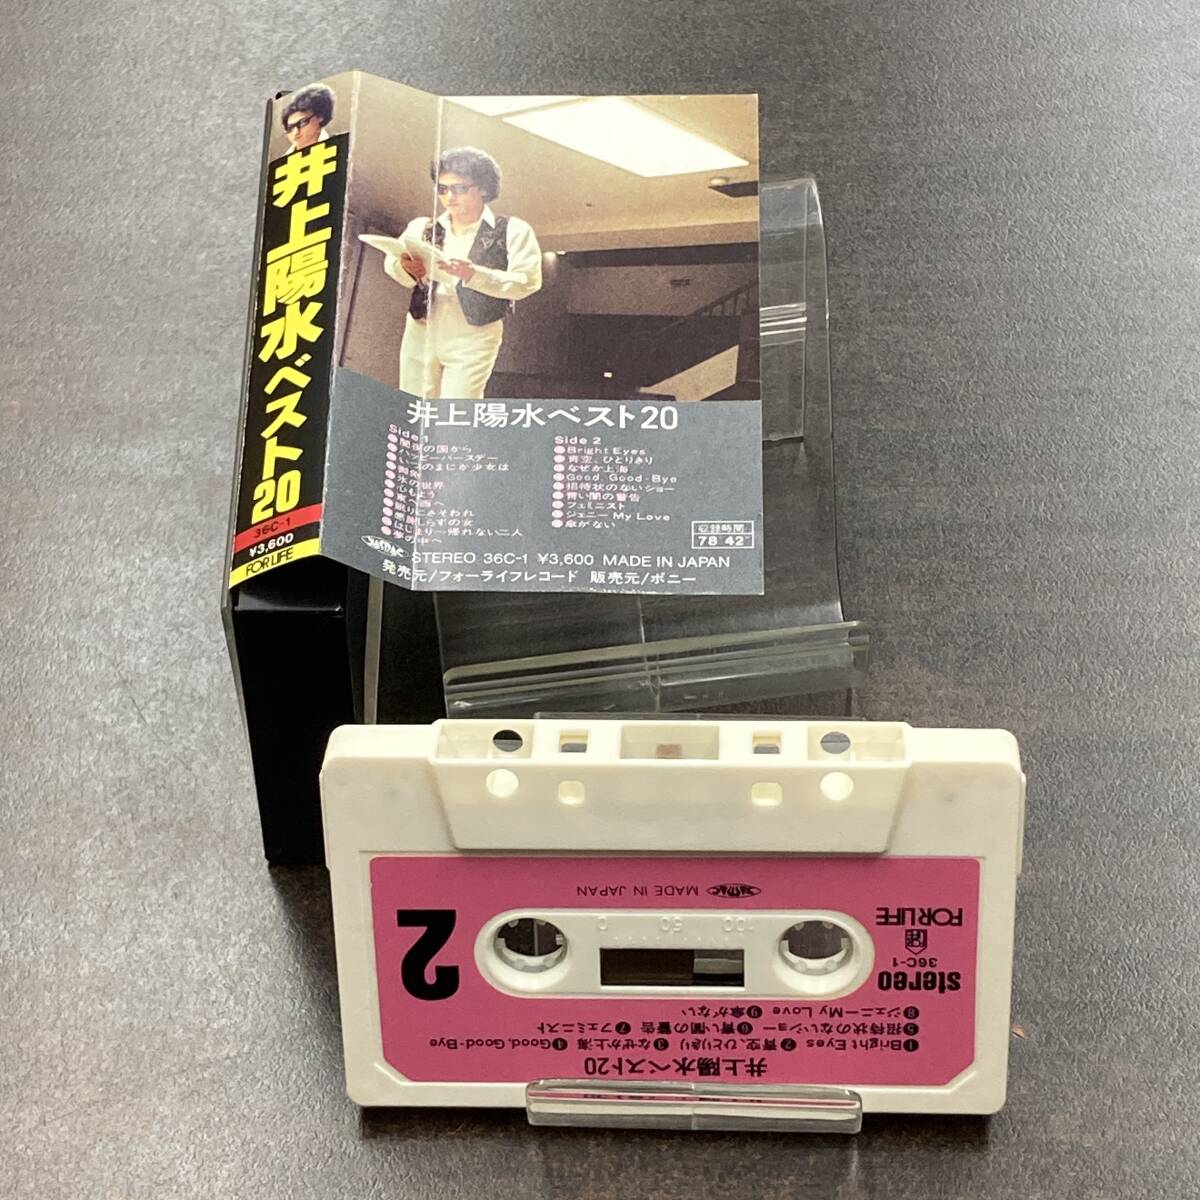 1171M 井上陽水 ベスト20 カセットテープ / Yousui Inoue Citypop Cassette Tapeの画像3